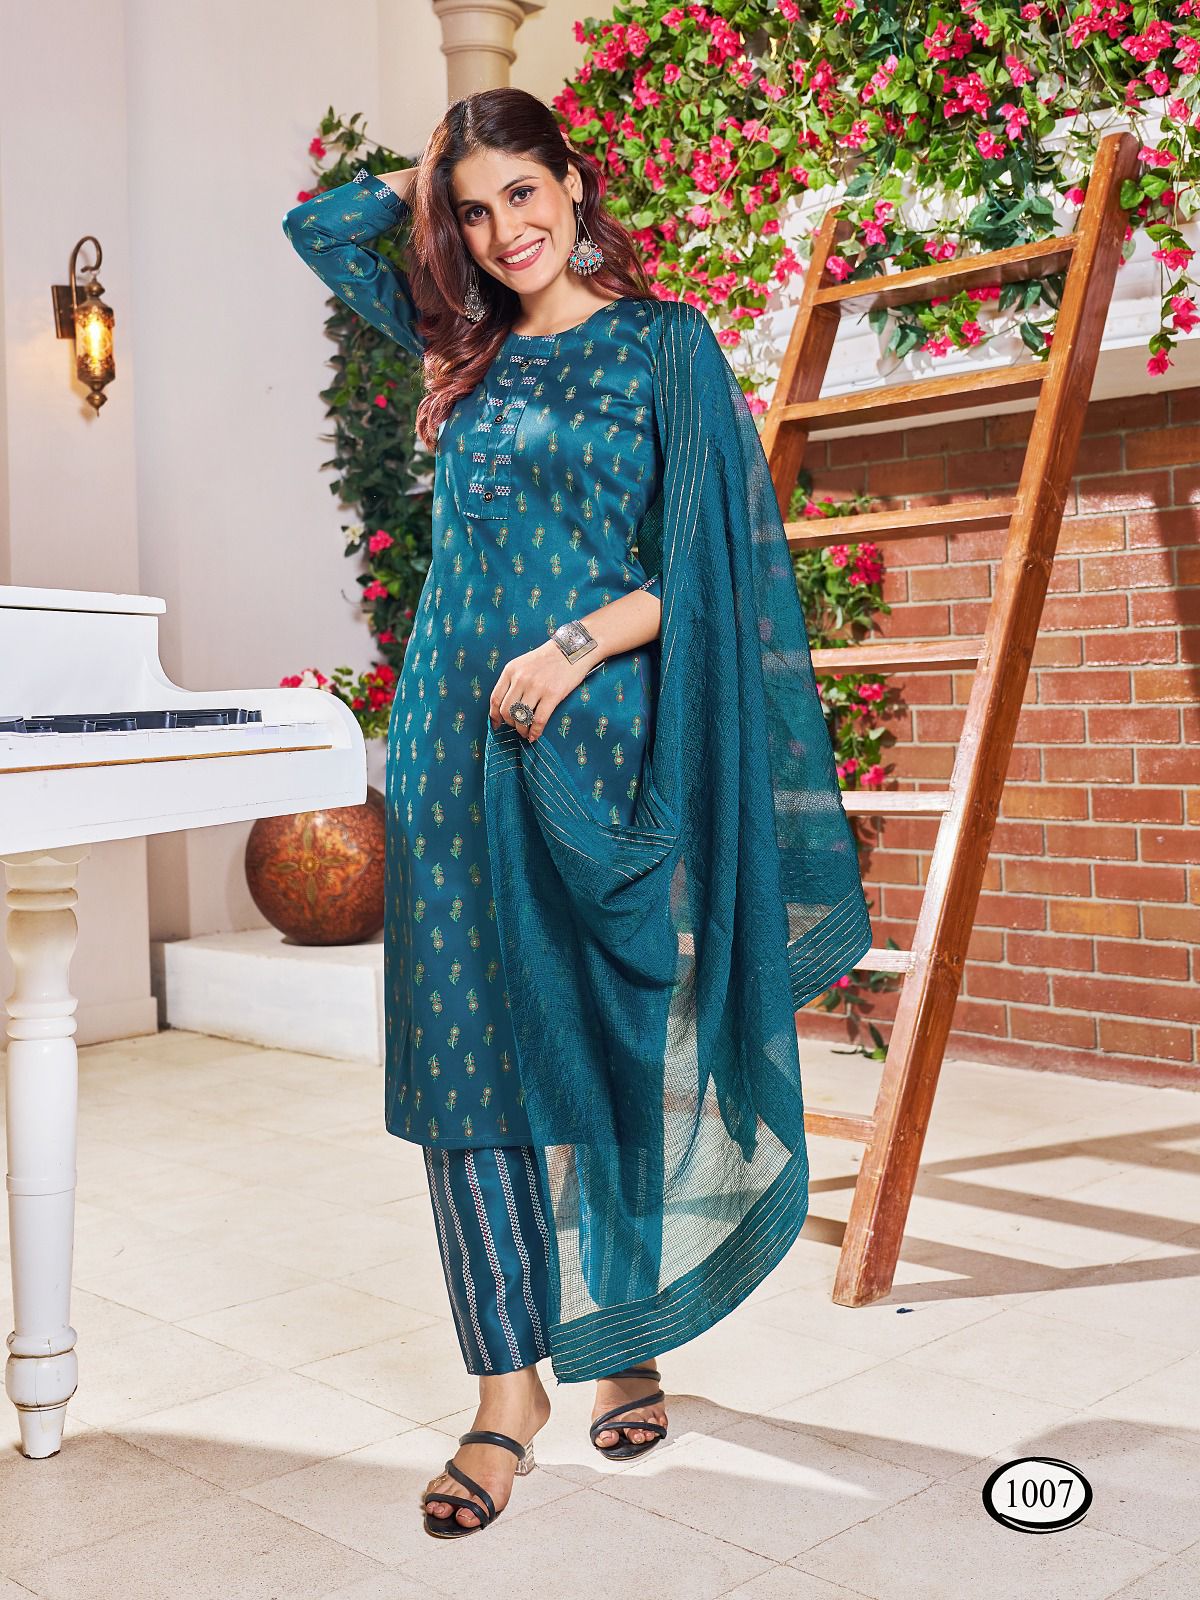 Buy Online Latest Indian Salwar Kameez, Punjabi Suits Collection